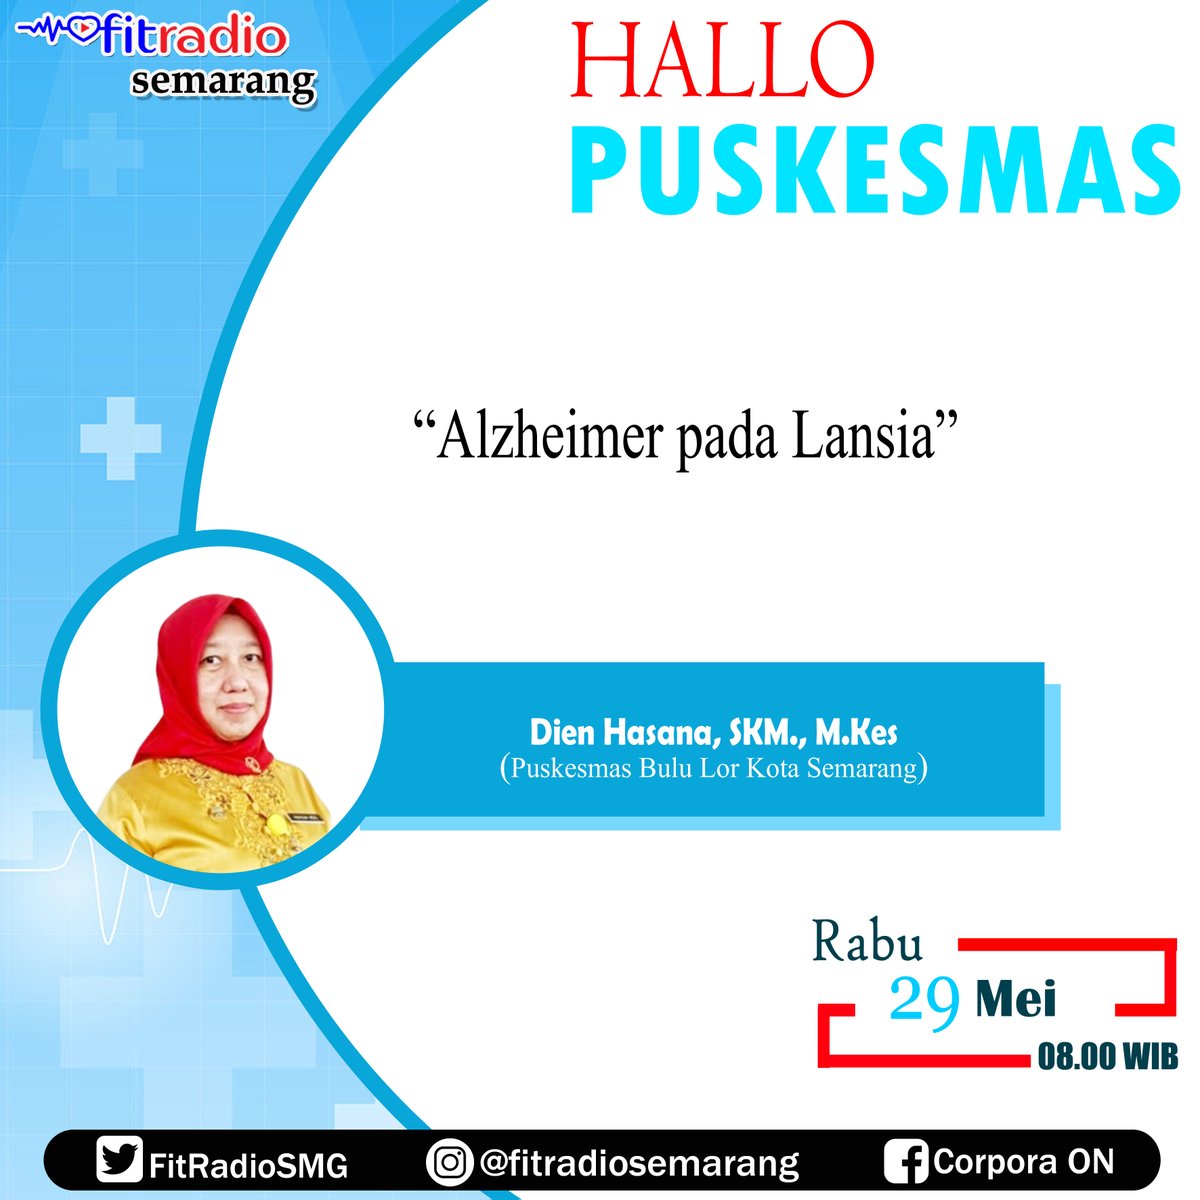 Hallo Puskesmas Jam 08.00 WIB

Alzheimer pada Lansia

Interaktif WA SMS 0811 811 9570

#hallopuskesmas #stayfit #puskesmas #stayfitforlife #lansia #kesehatan #indonesia #radiokesehatan #alzheimer #radio #mei #rabu